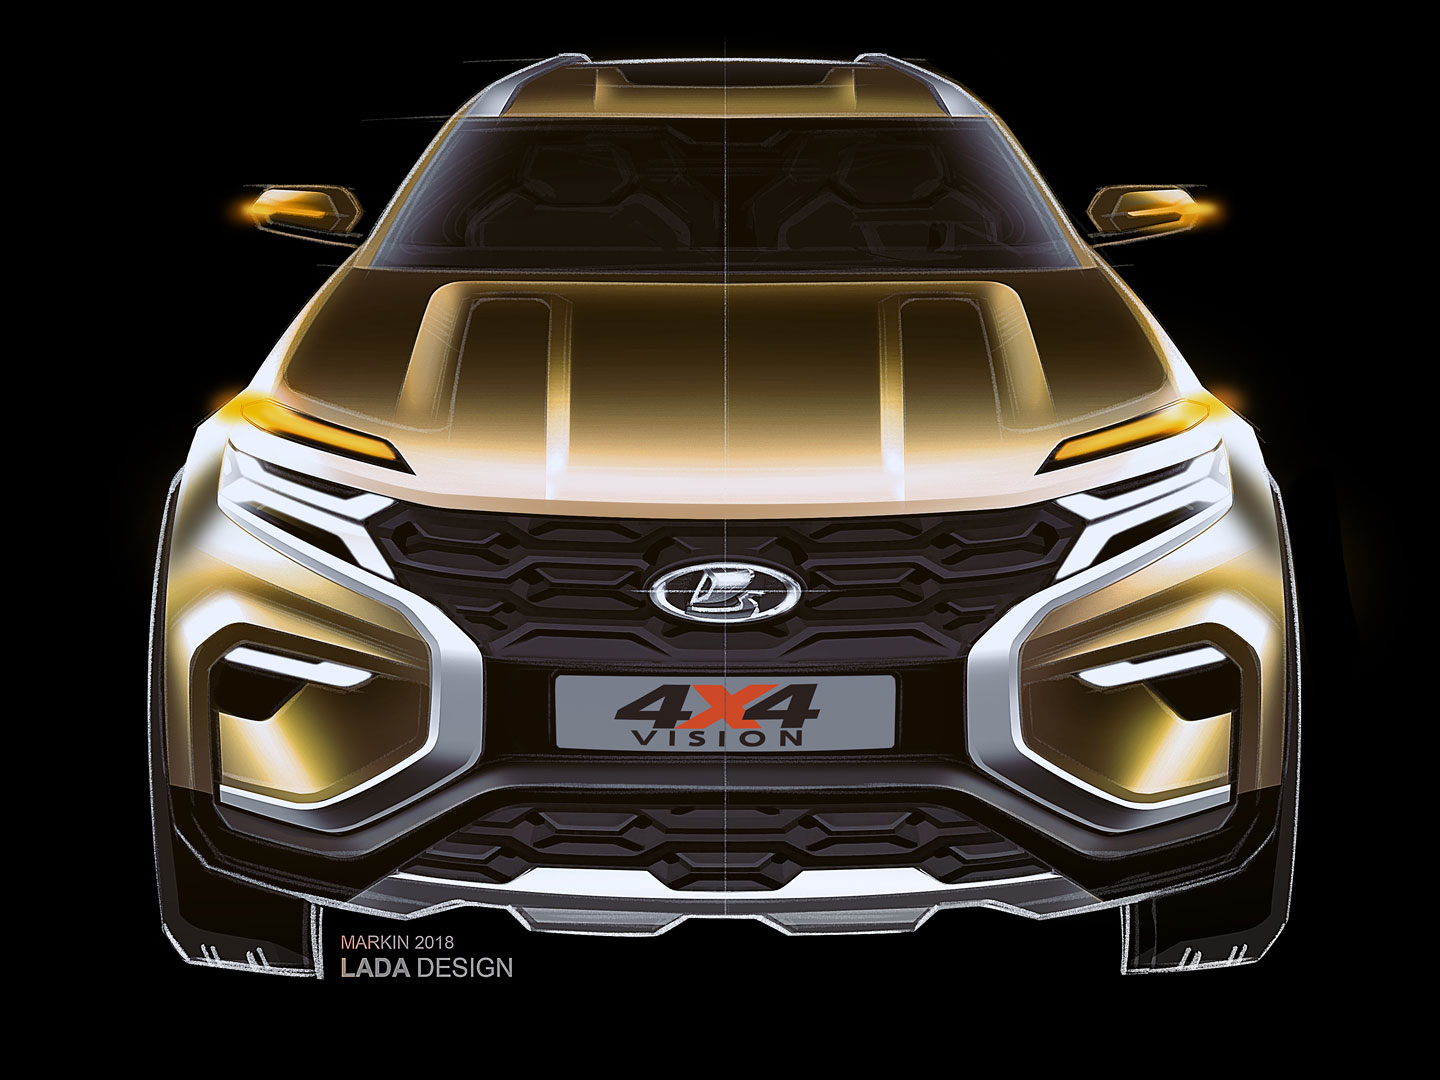 Lada 4x4 Vision, 2018 - Design Sketch by Vasiliy Markin